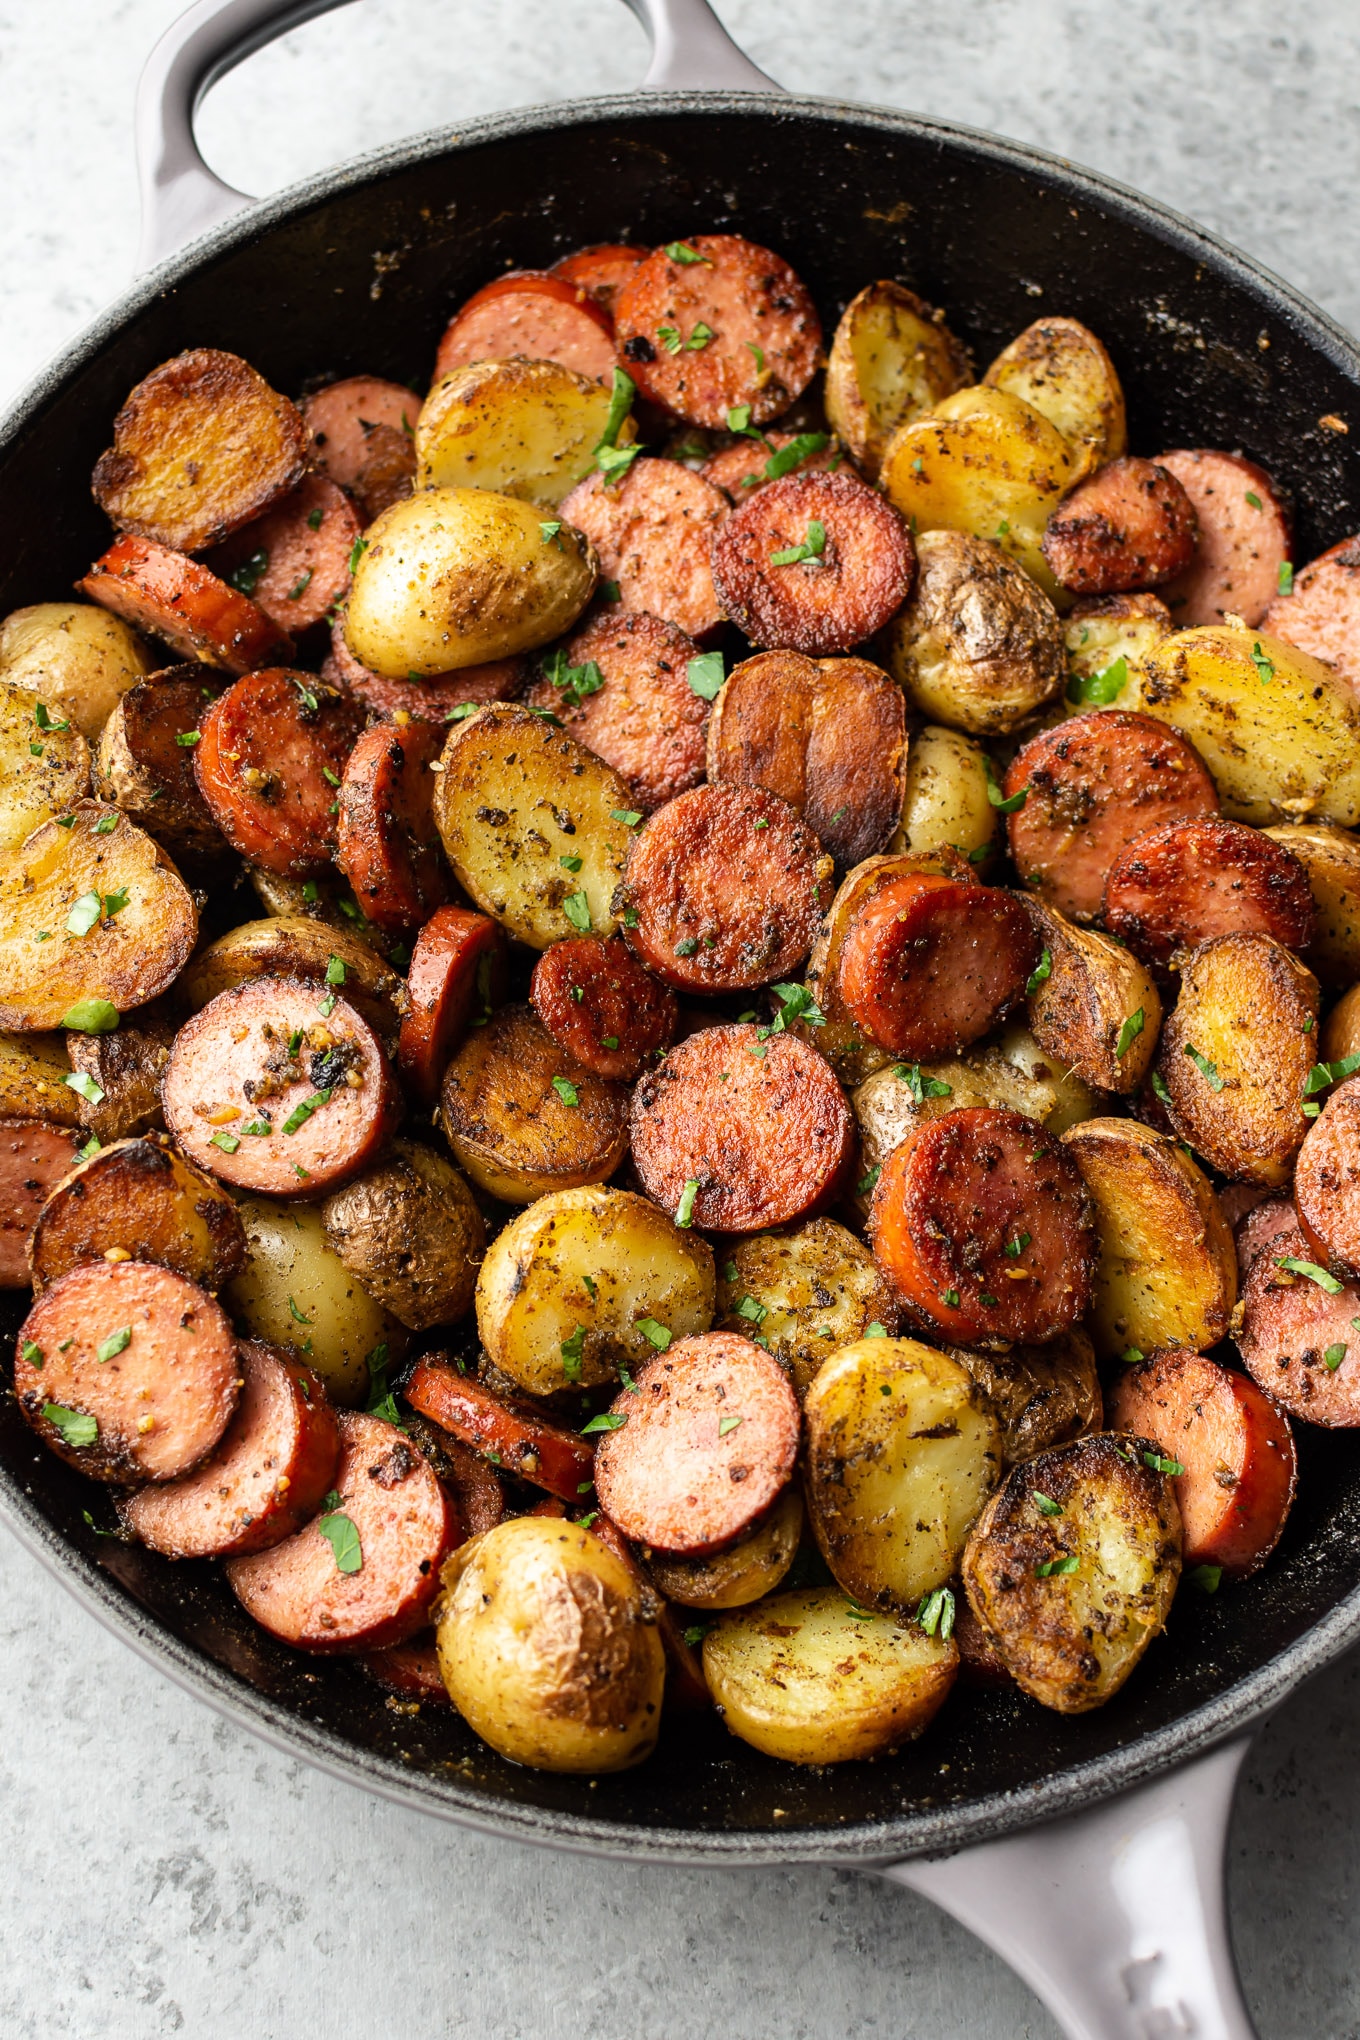 https://www.saltandlavender.com/wp-content/uploads/2020/07/sausage-and-potatoes-recipe-1.jpg